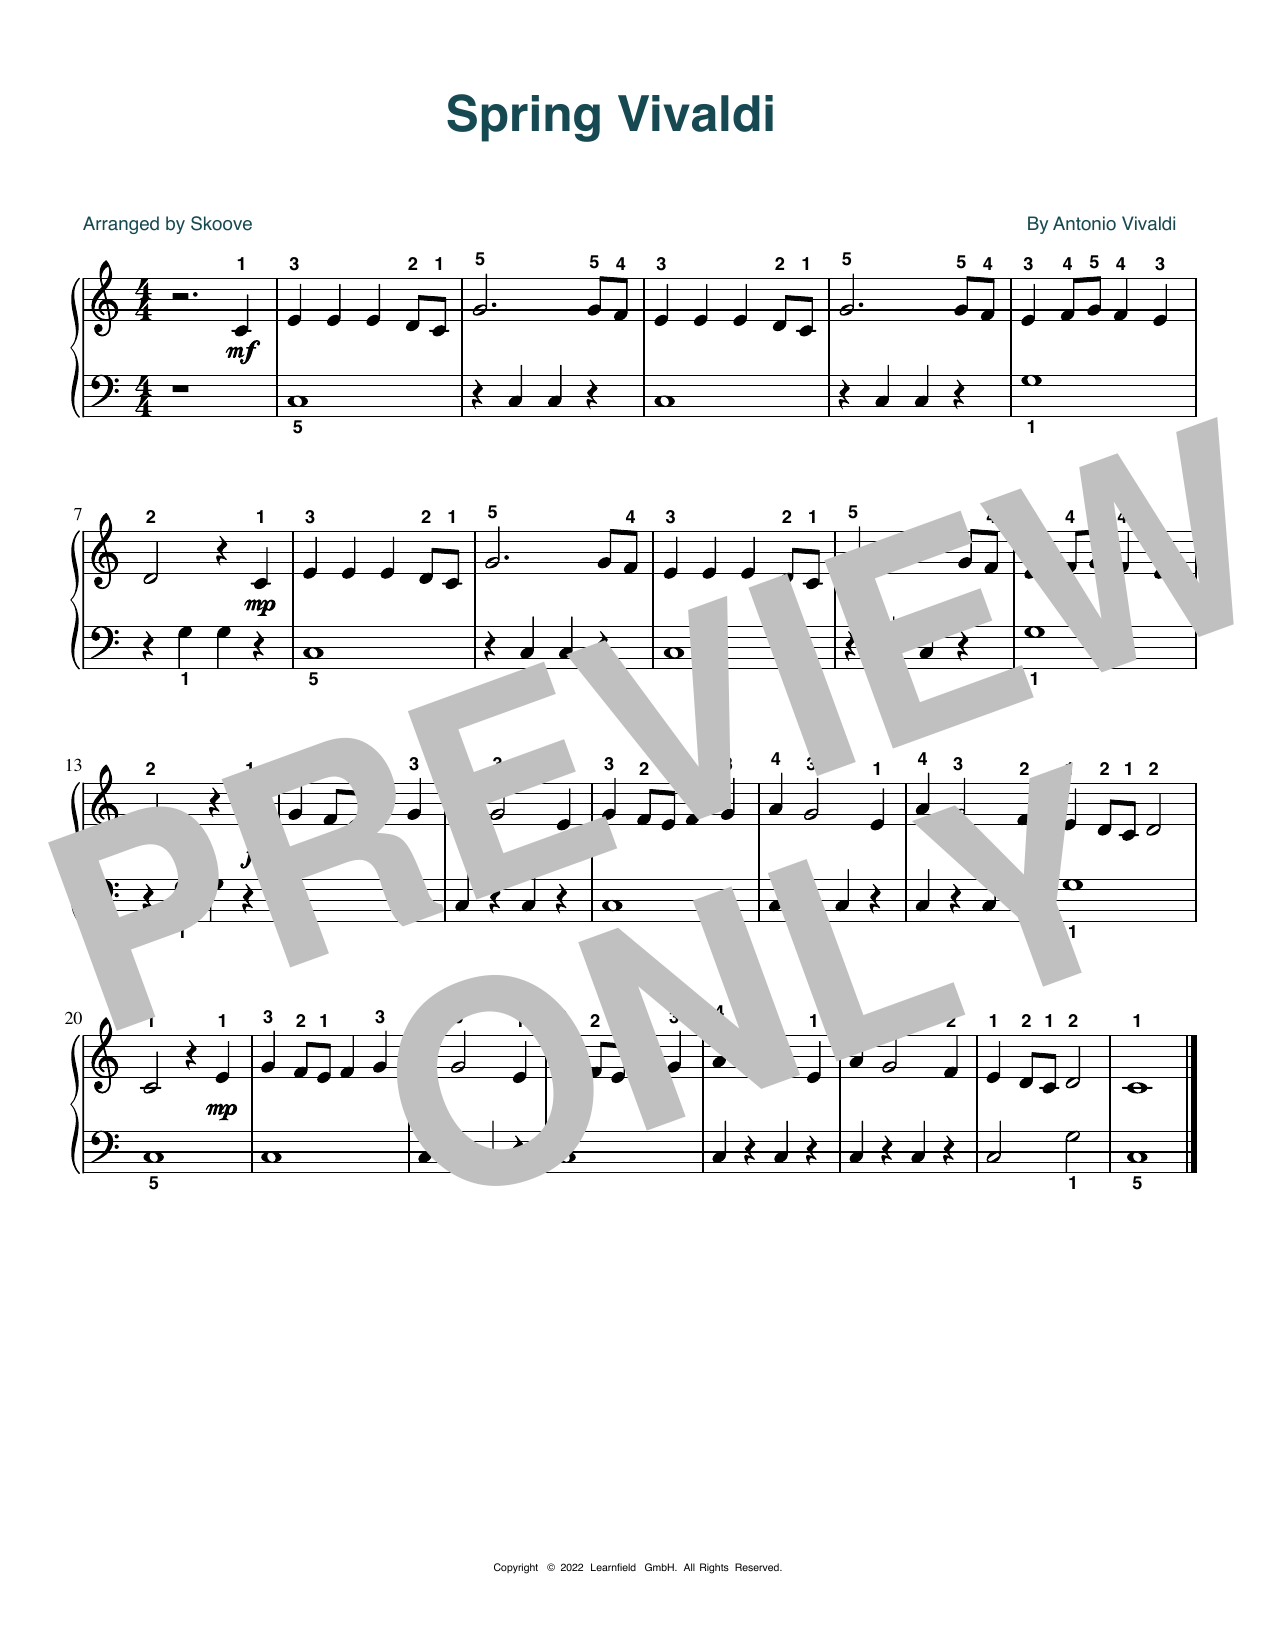 Antonio Vivaldi Spring Vivaldi (arr. Skoove) Sheet Music Notes & Chords for Beginner Piano (Abridged) - Download or Print PDF